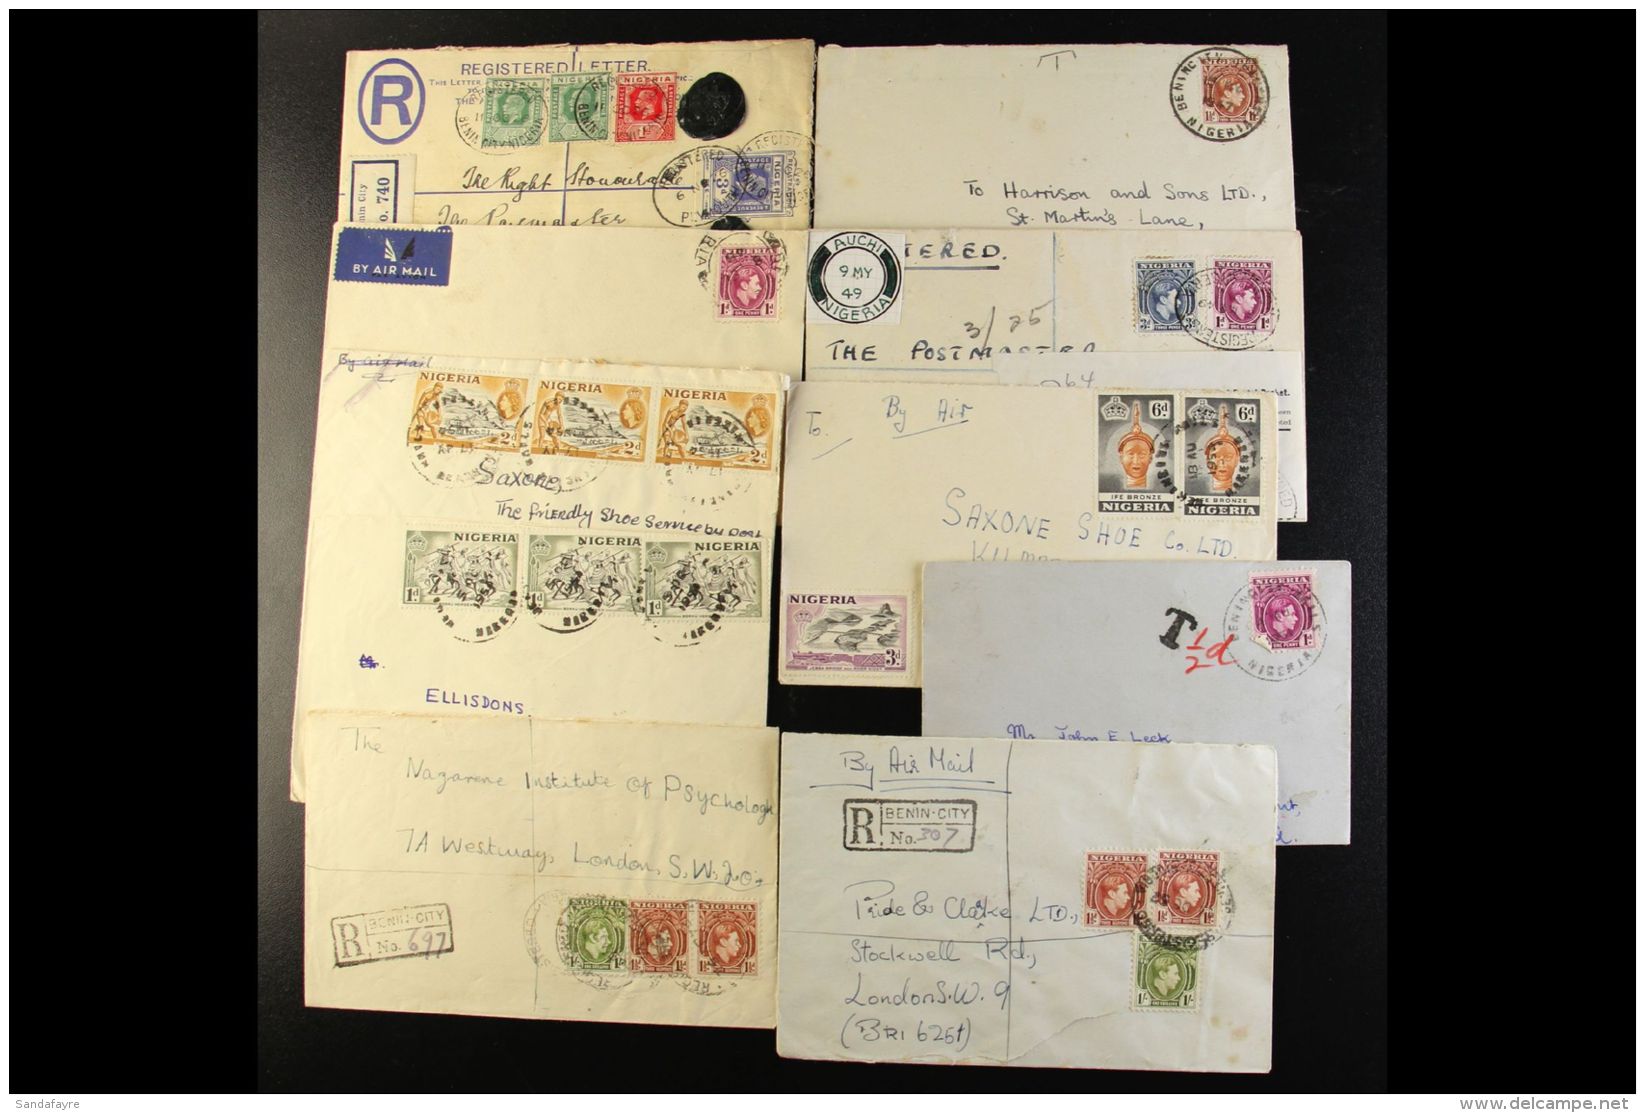 BENIN - COVERS 1926-67 Incl. 1926 3d Registered Envelope Benin City To London, 1947 Skeleton Cds, 1951 "T" Postage... - Nigeria (...-1960)